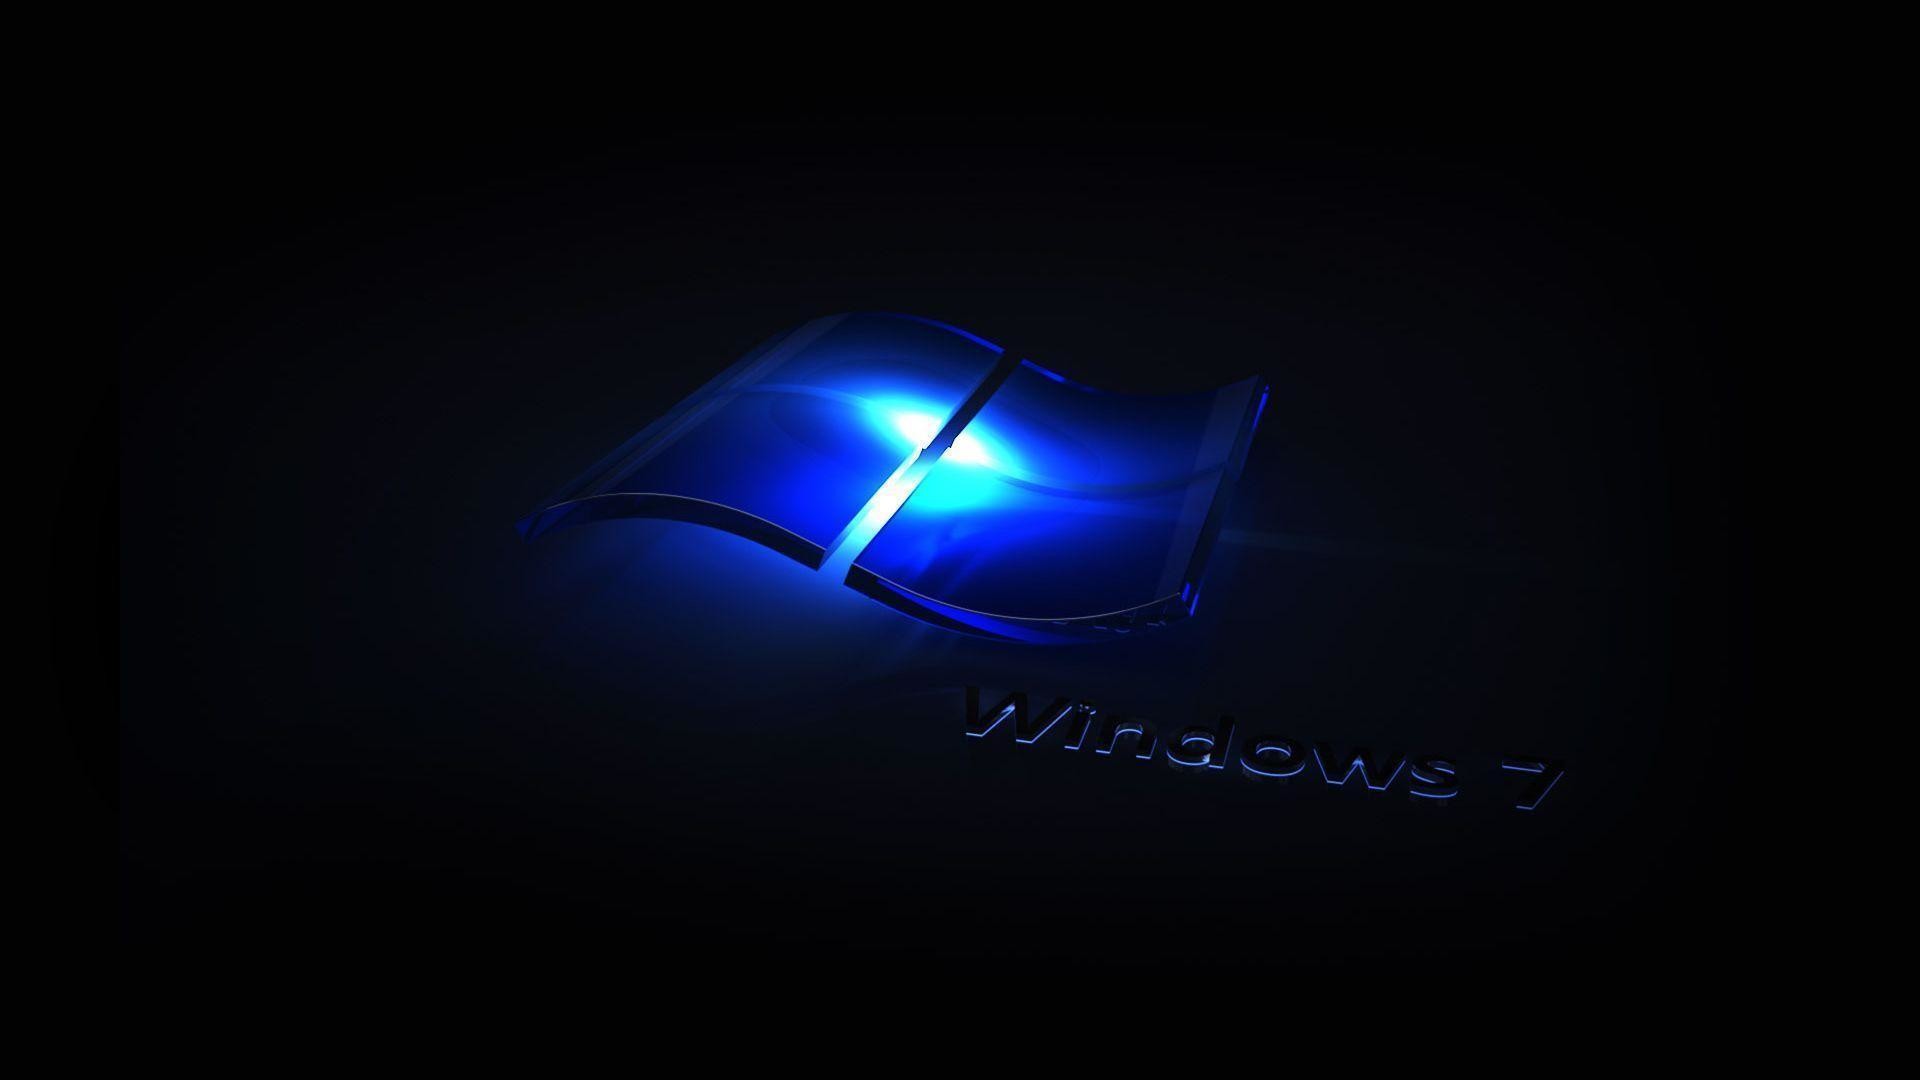 1920x1080 Desktop Wallpaper Â· Gallery Â· Windows 7 Â· Blue Light Windows 7 .